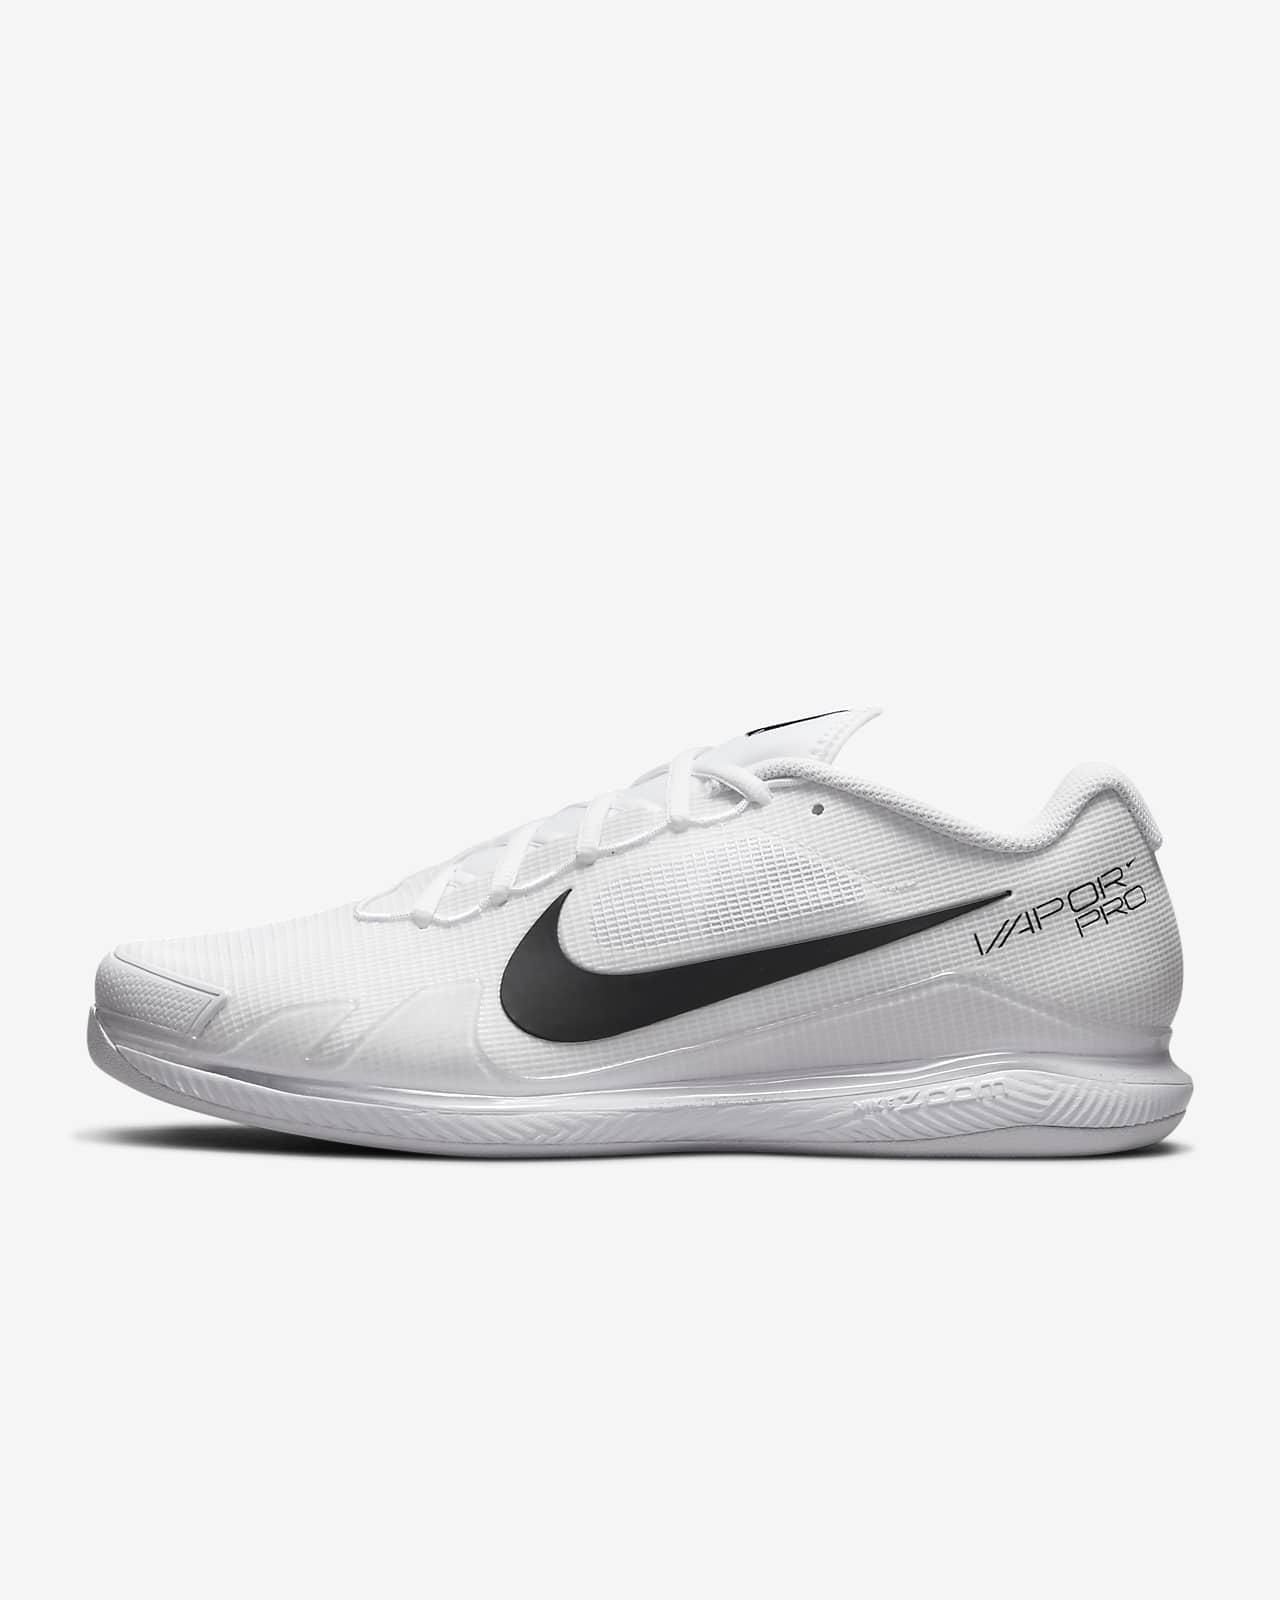 Air Zoom Vapor X Zapatillas de tenis para pista dura - Nike